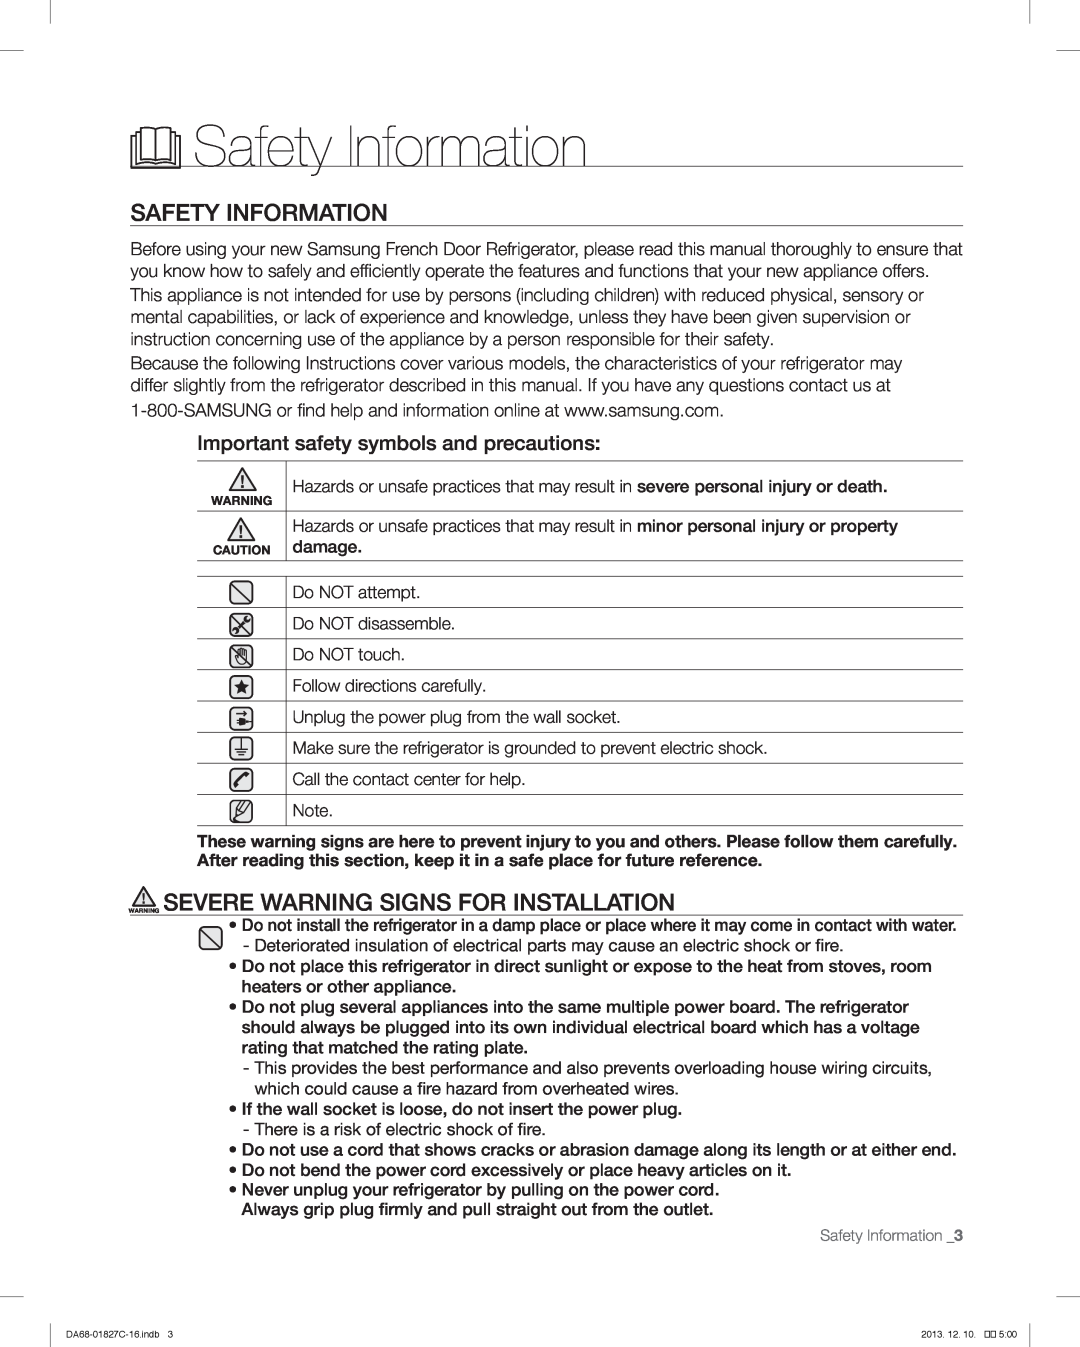 Samsung RFG237AARS user manual Safety Information, Warning Severe Warning Signs For Installation 